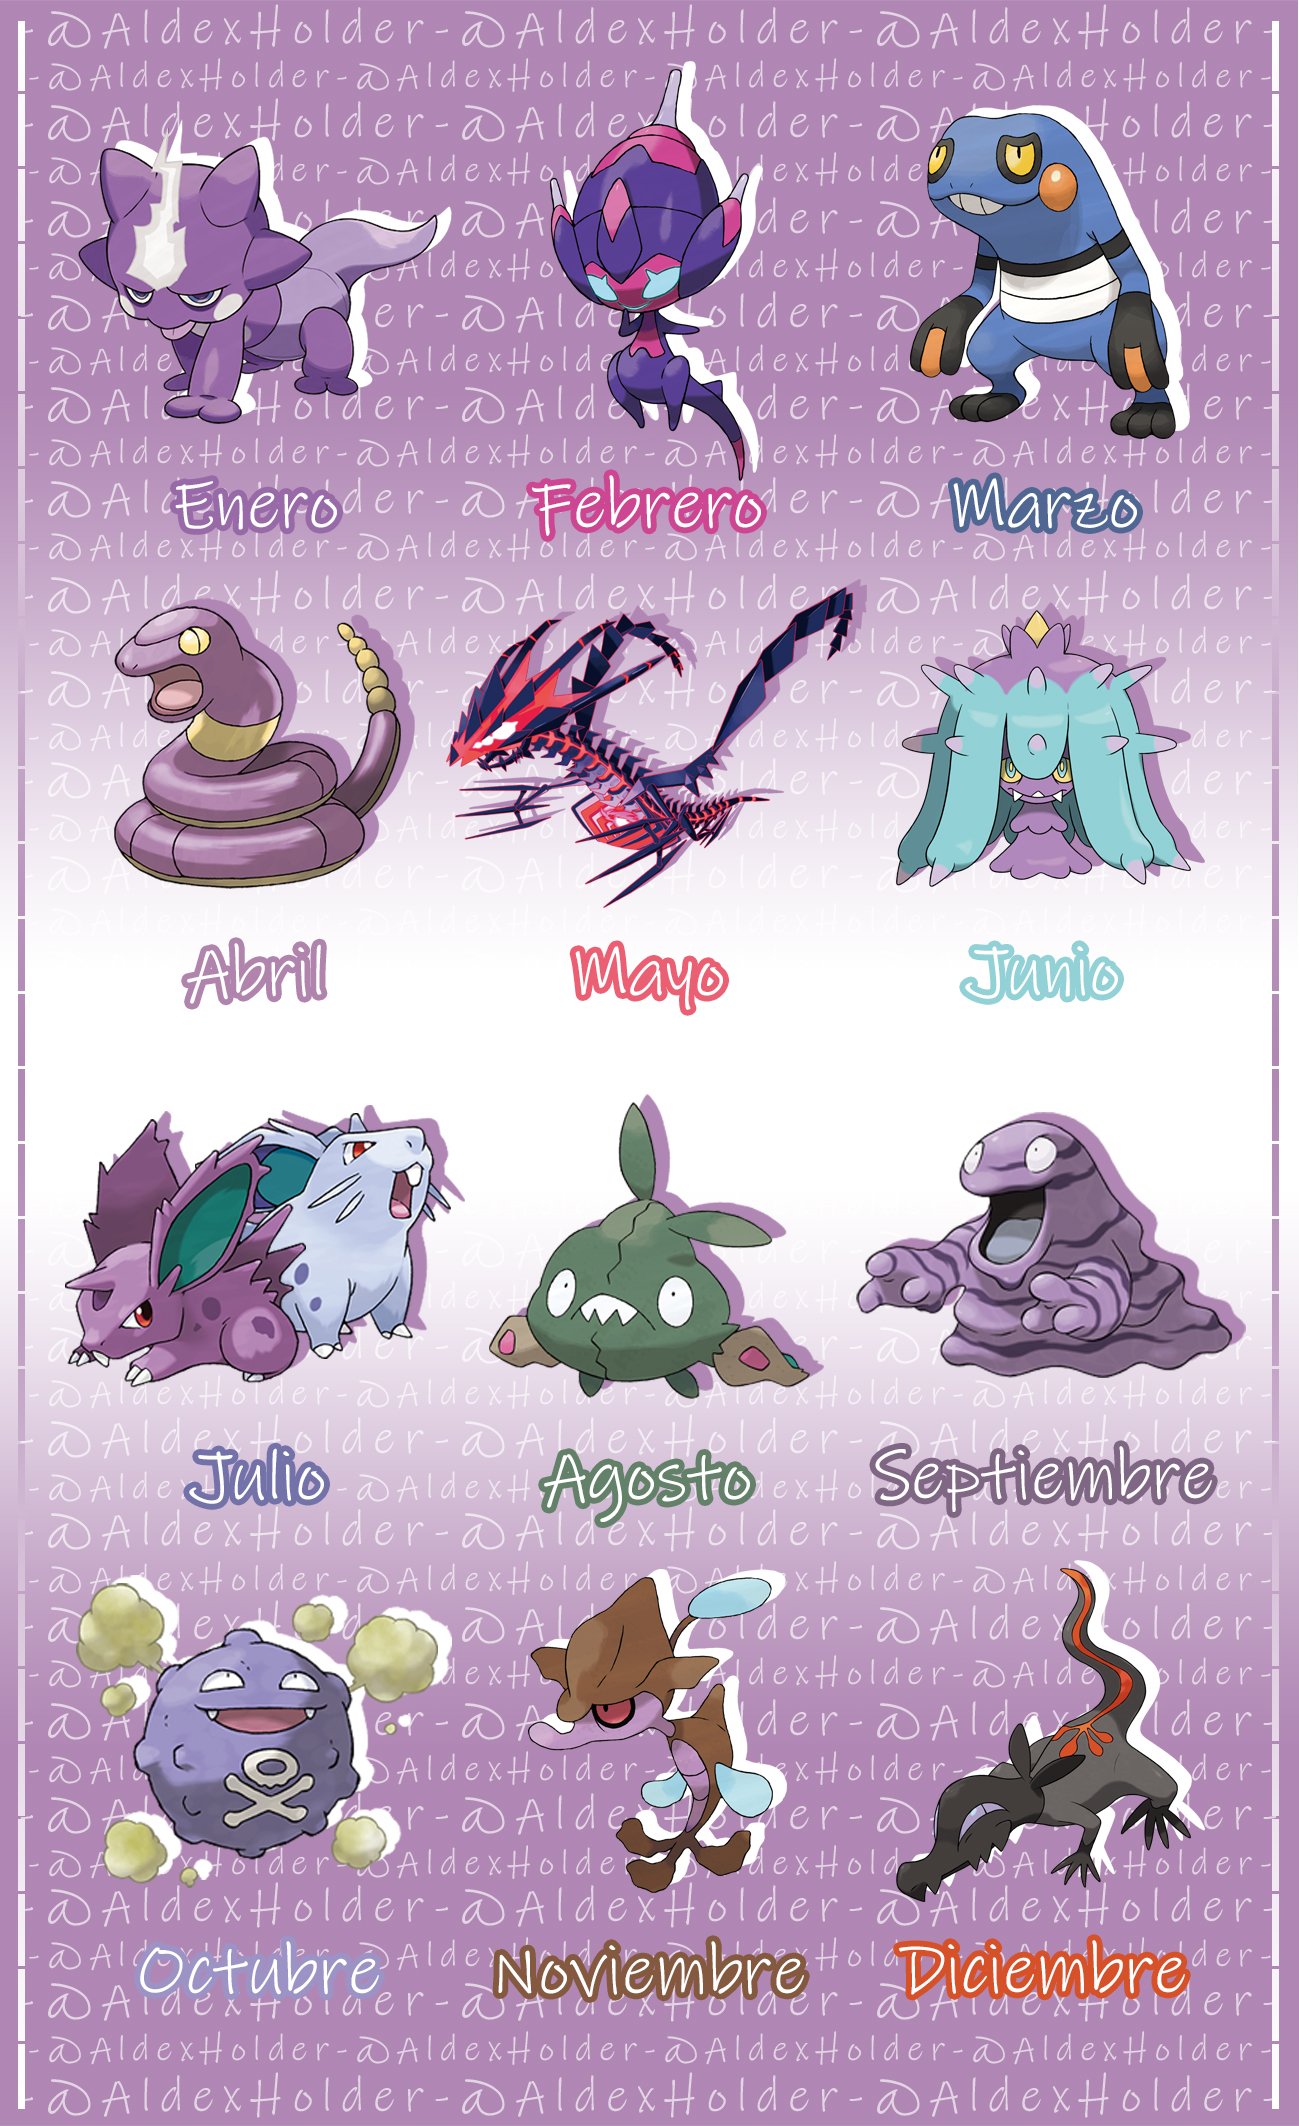 Categoria:Pokémon do tipo Venenoso, PokéPédia